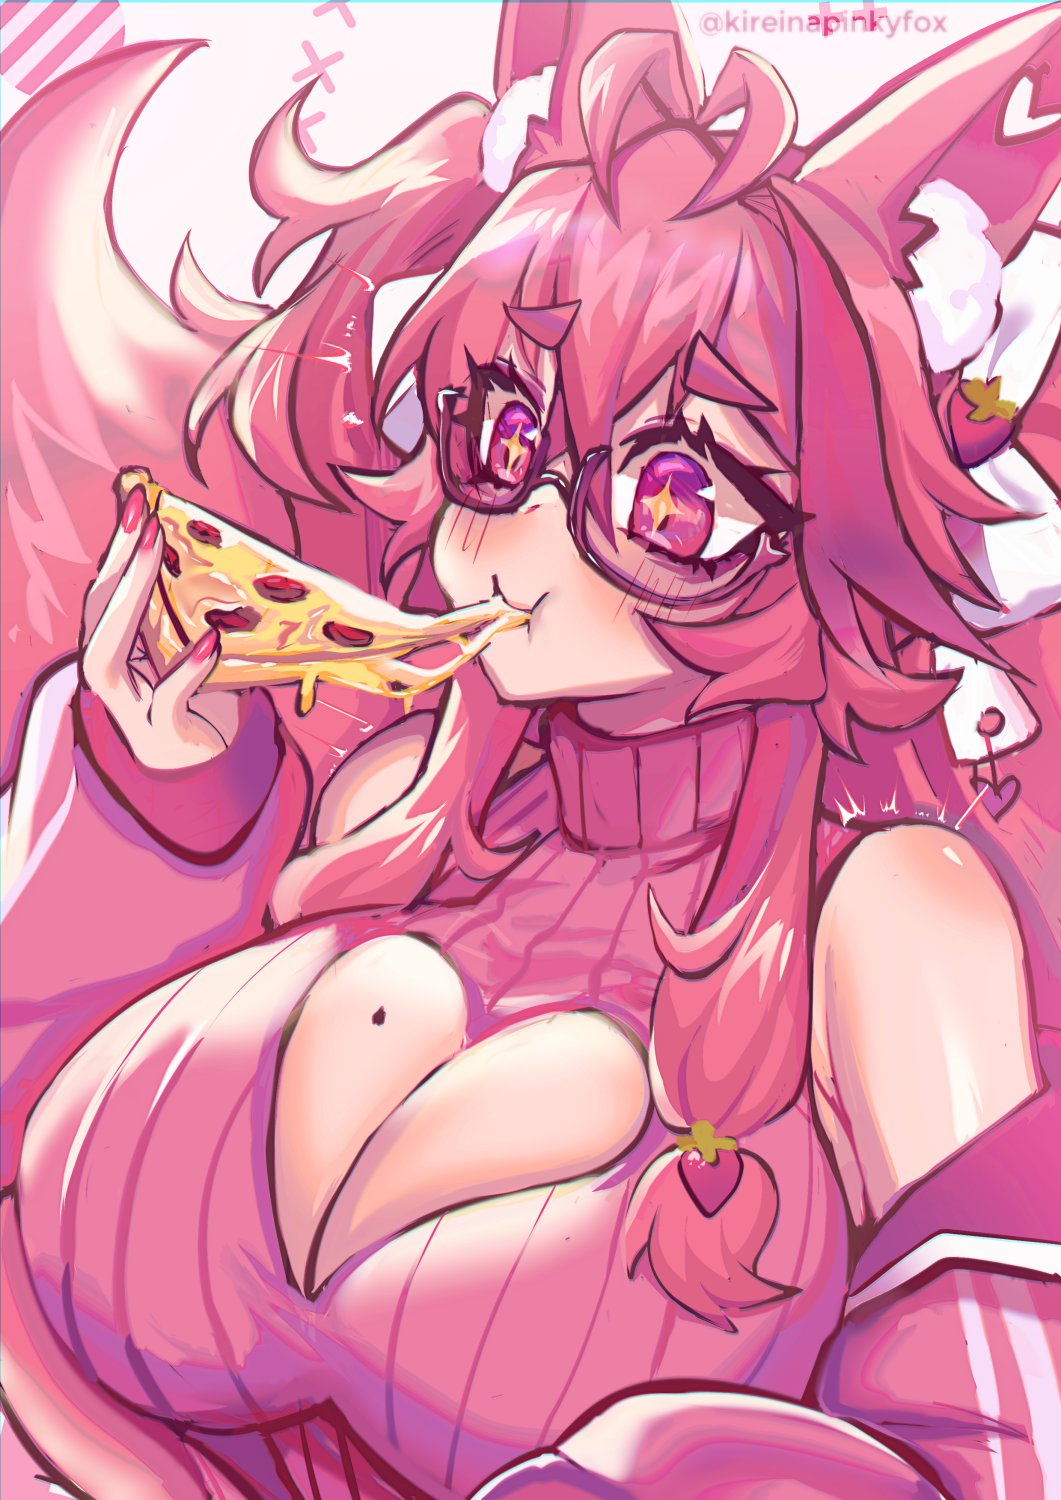 X 上的◣ Kuroina ☔ ◥：「just a pinky fox really wants some pizza 🍓💦  t.coJdrkkorZPC」  X